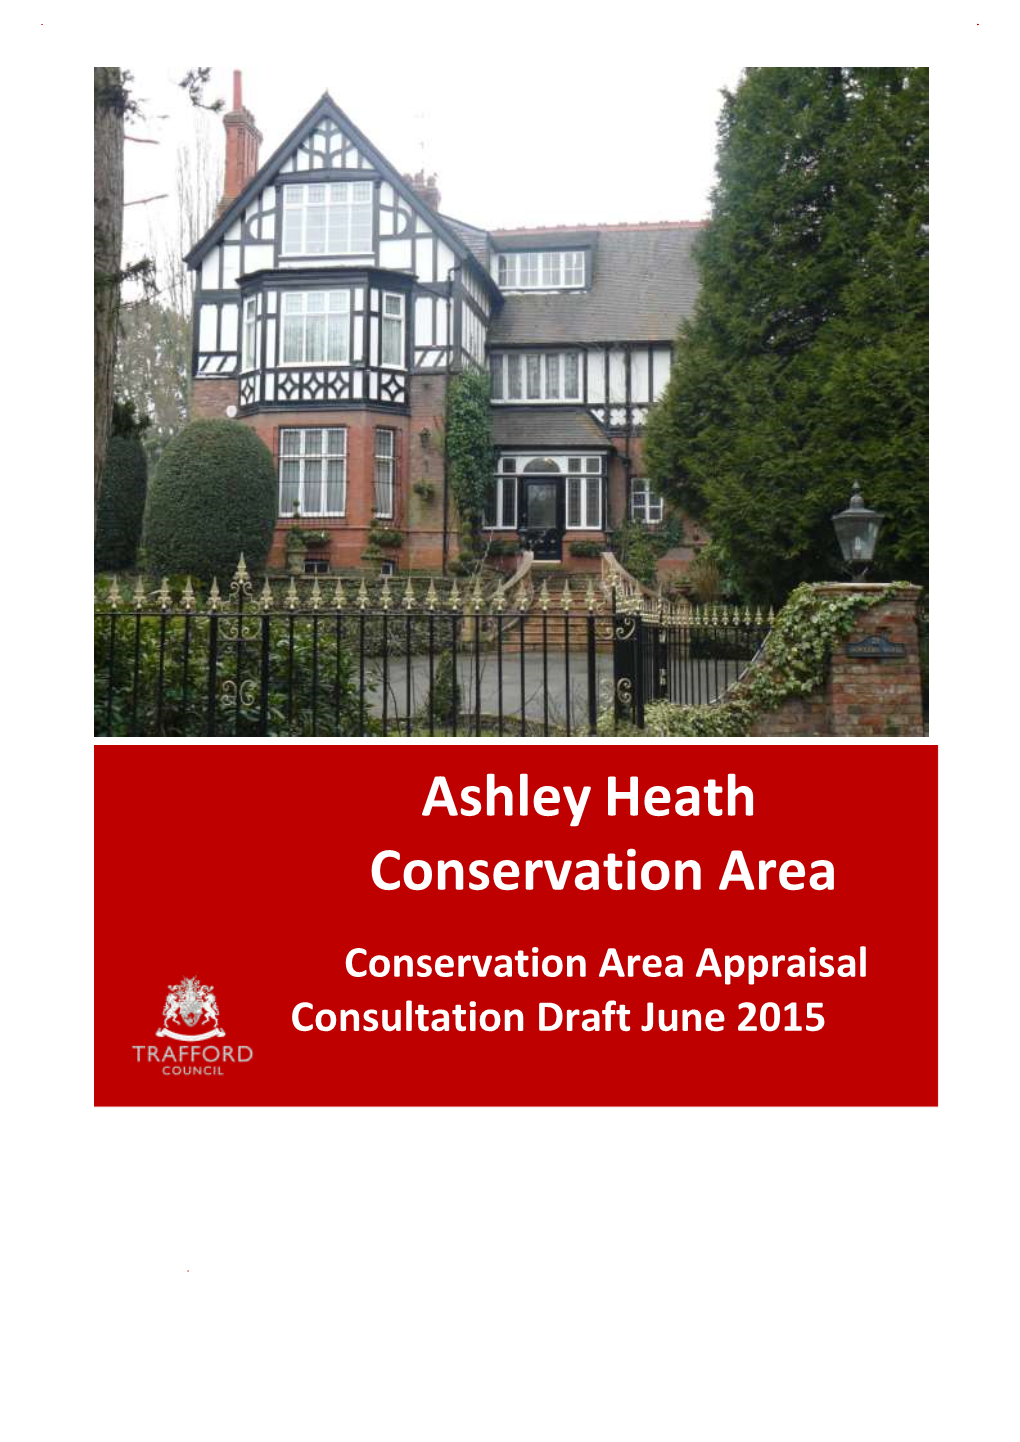 Ashley Heath Conservation Area: Draft Conservation Area Appraisal June2015